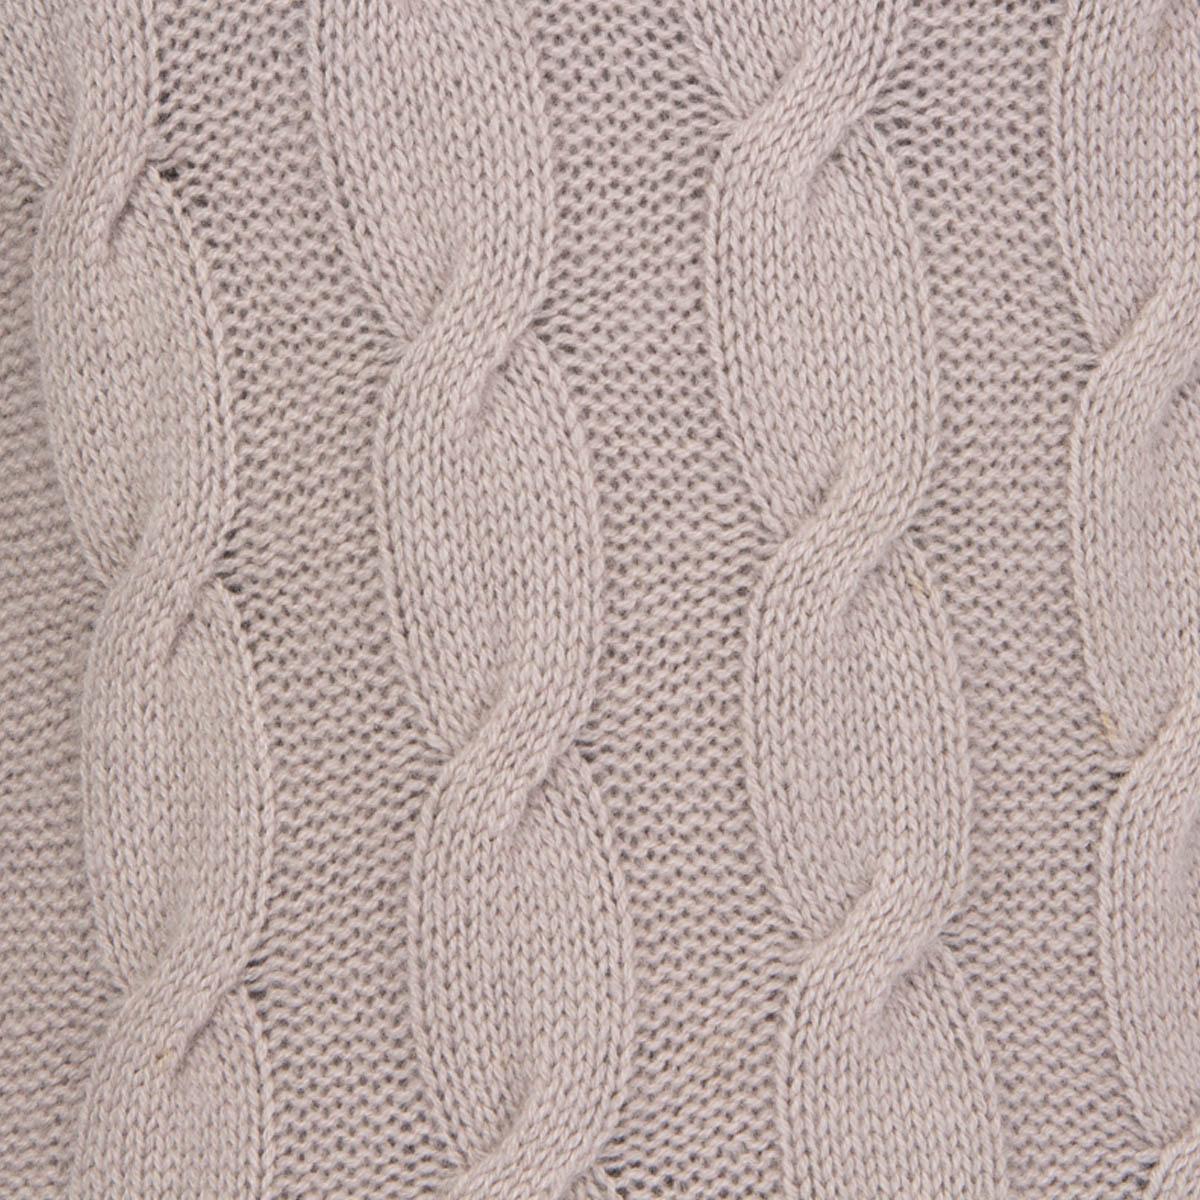 Gray LORO PIANA dusty rose cashmere CABLE KNIT Crewneck Sweater 42 M